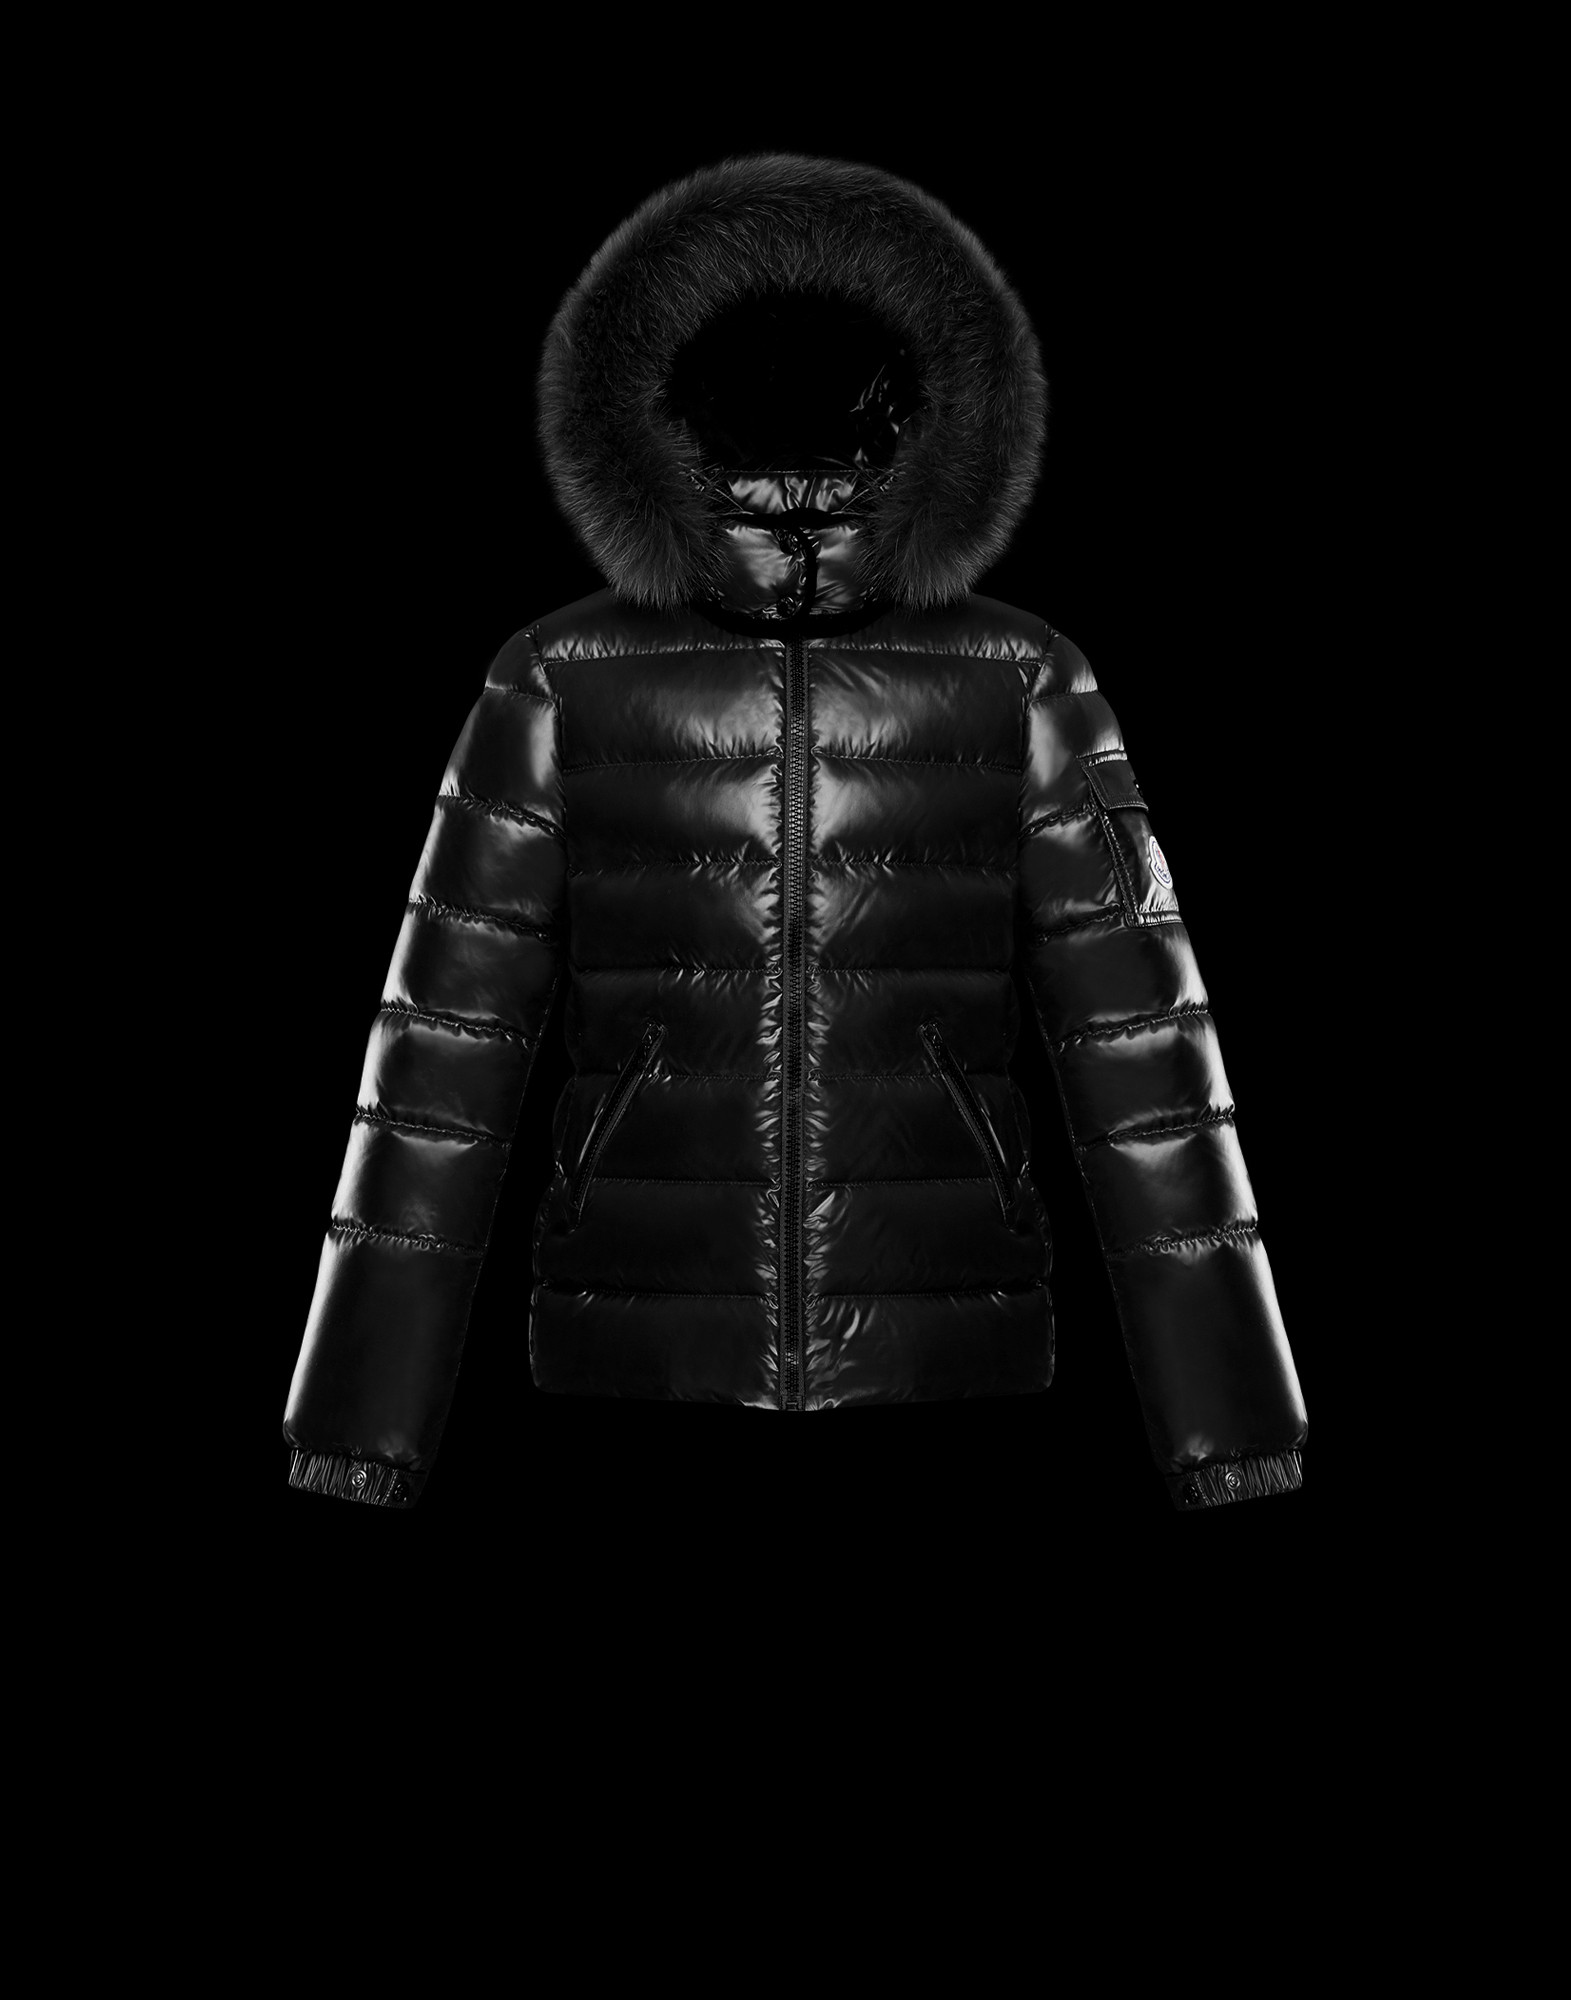 moncler bady fur jacket